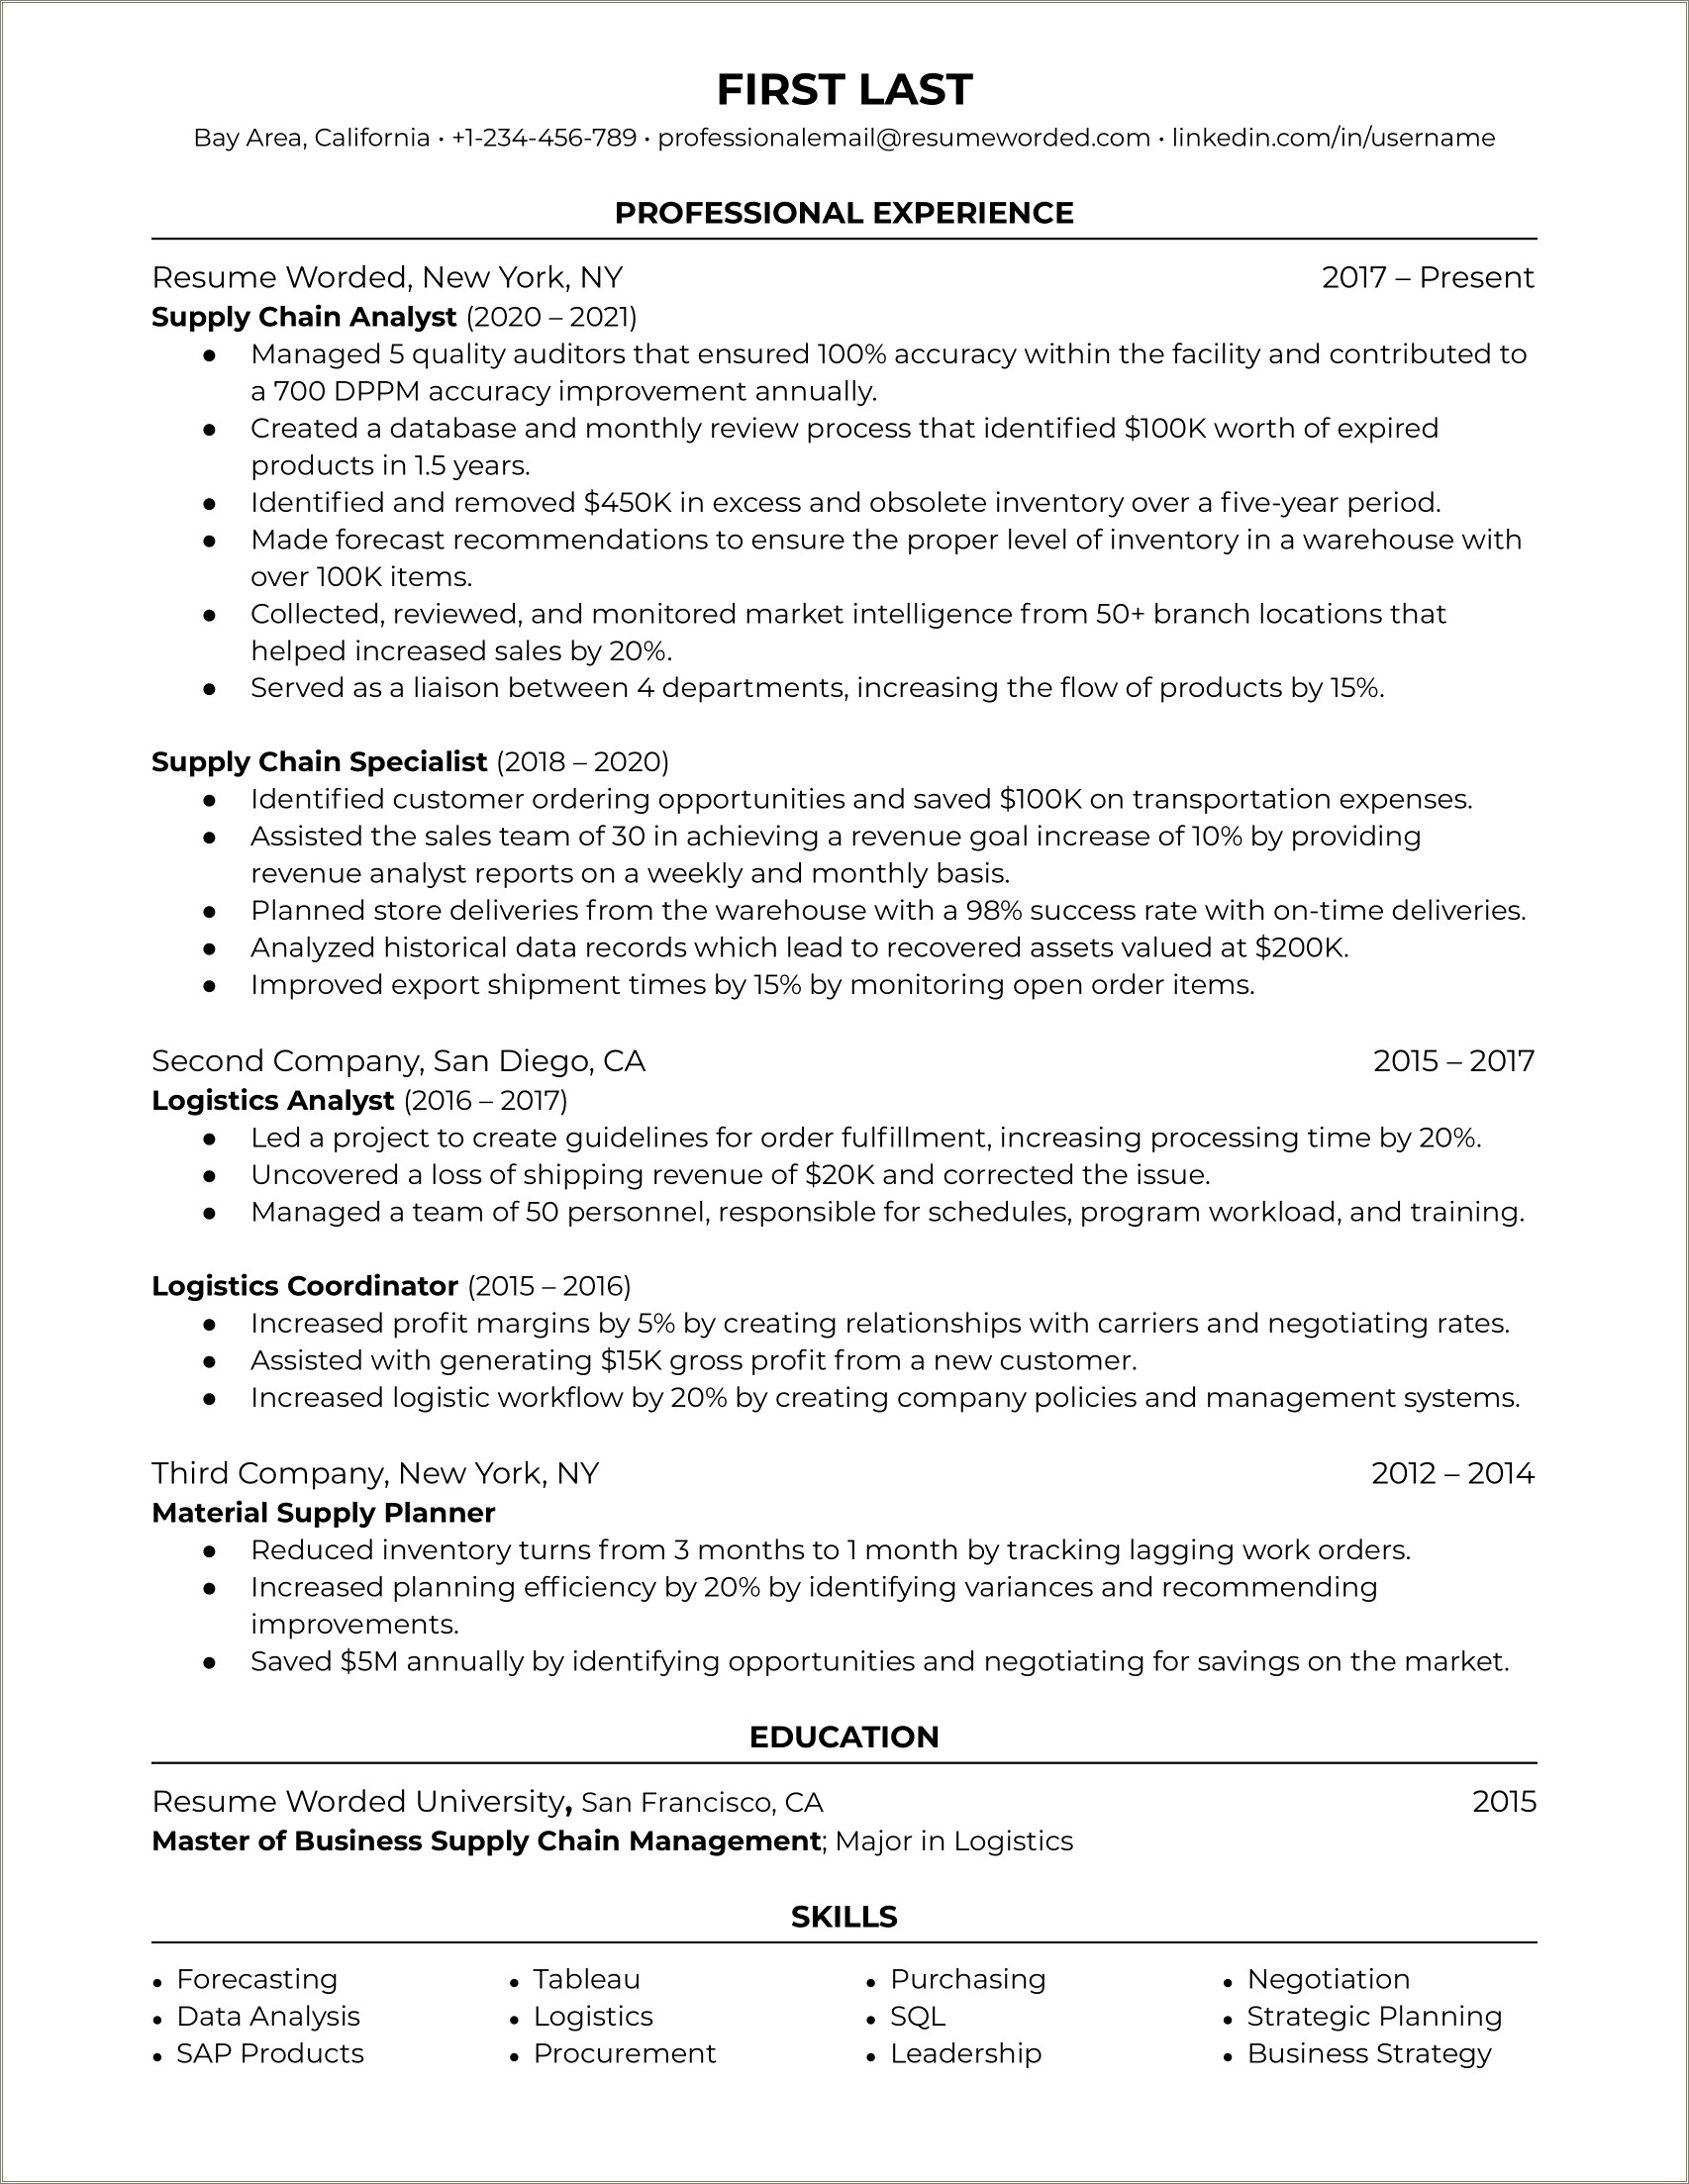 Sample Resume Formats For Mid Level